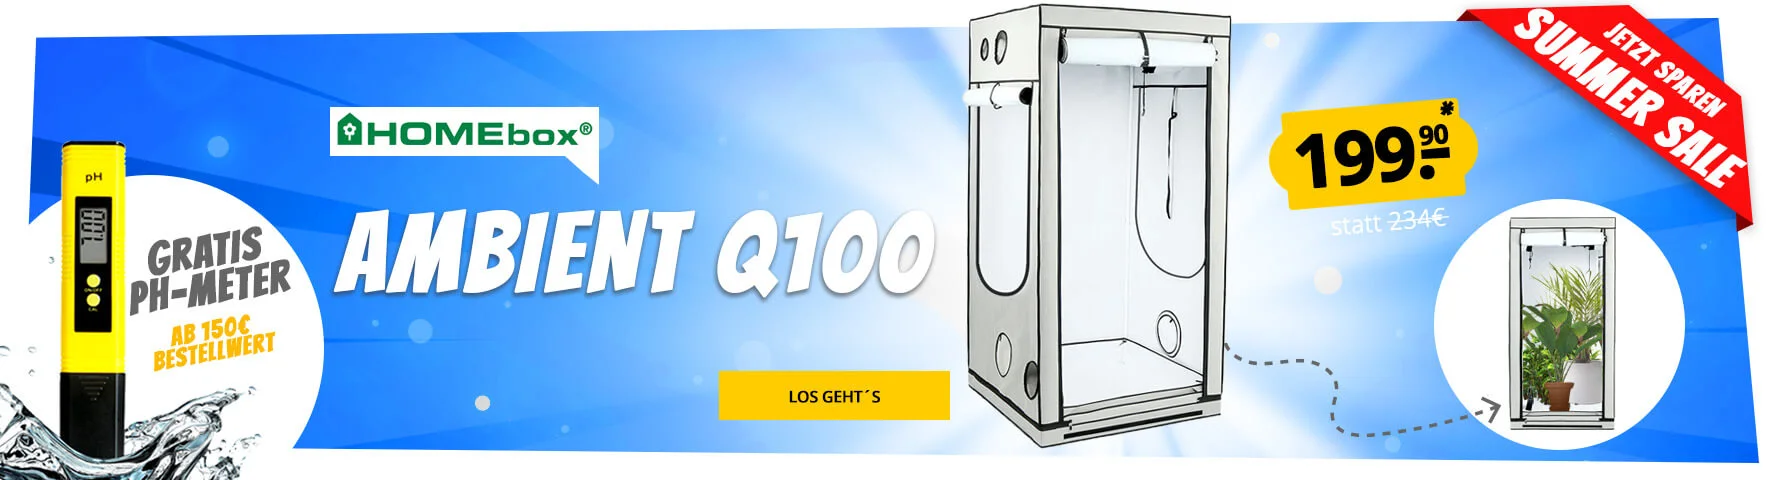 Homebox Ambient Q100 Summer Sale pH Meter gratis